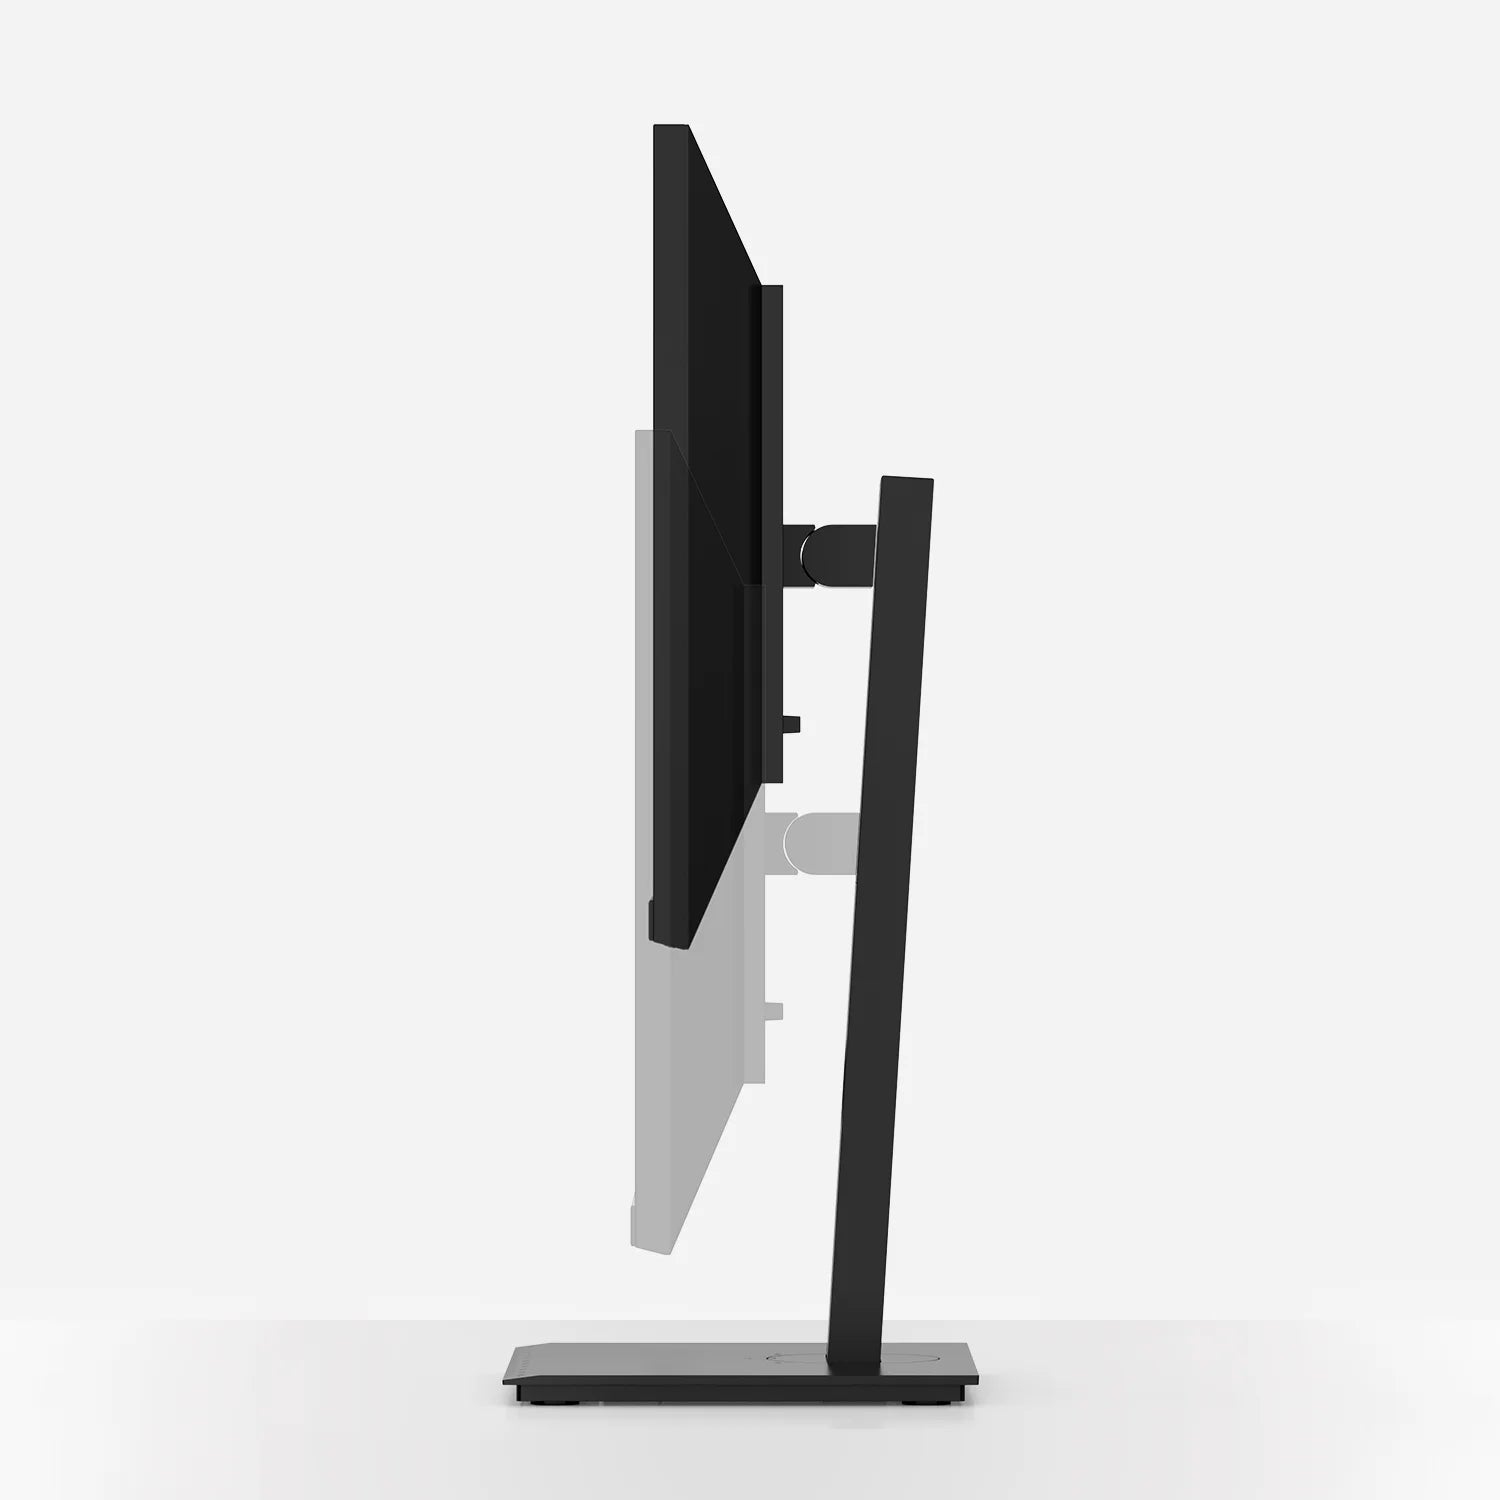 MP 24 inch desktop monitor has adjust the height design